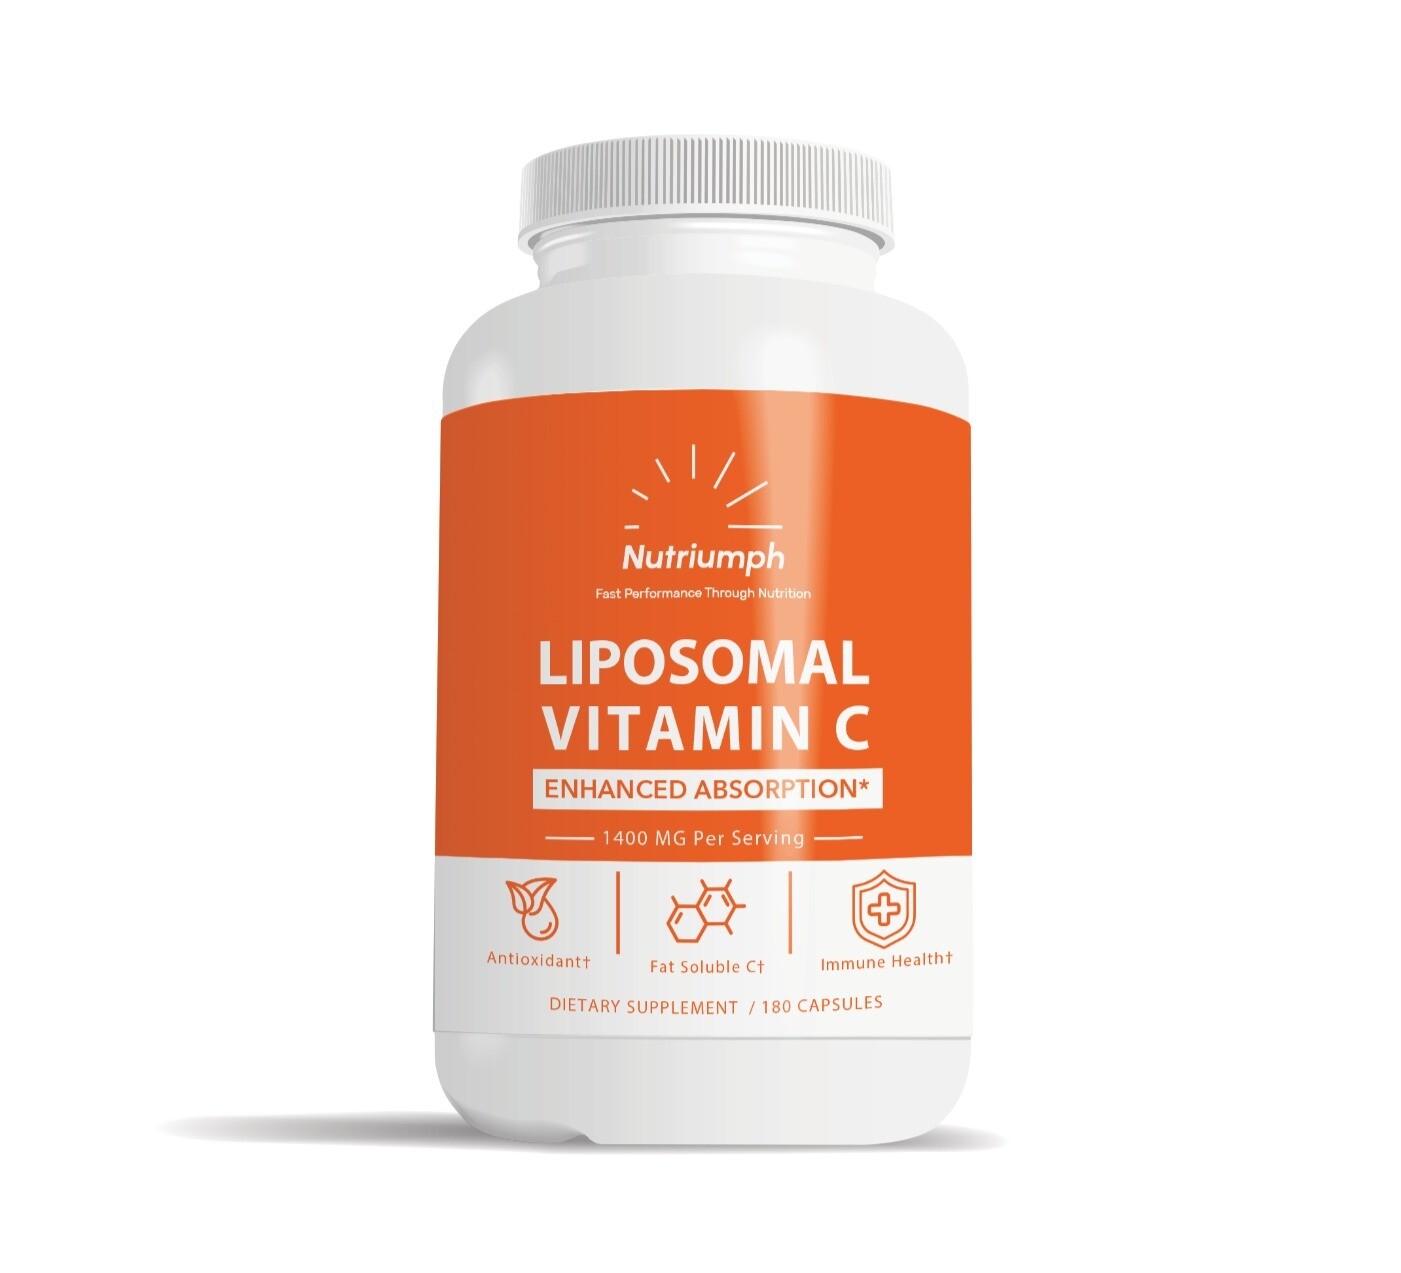 LIPOSOMAL VITAMIN C - Immune Health & Antioxidant Protection